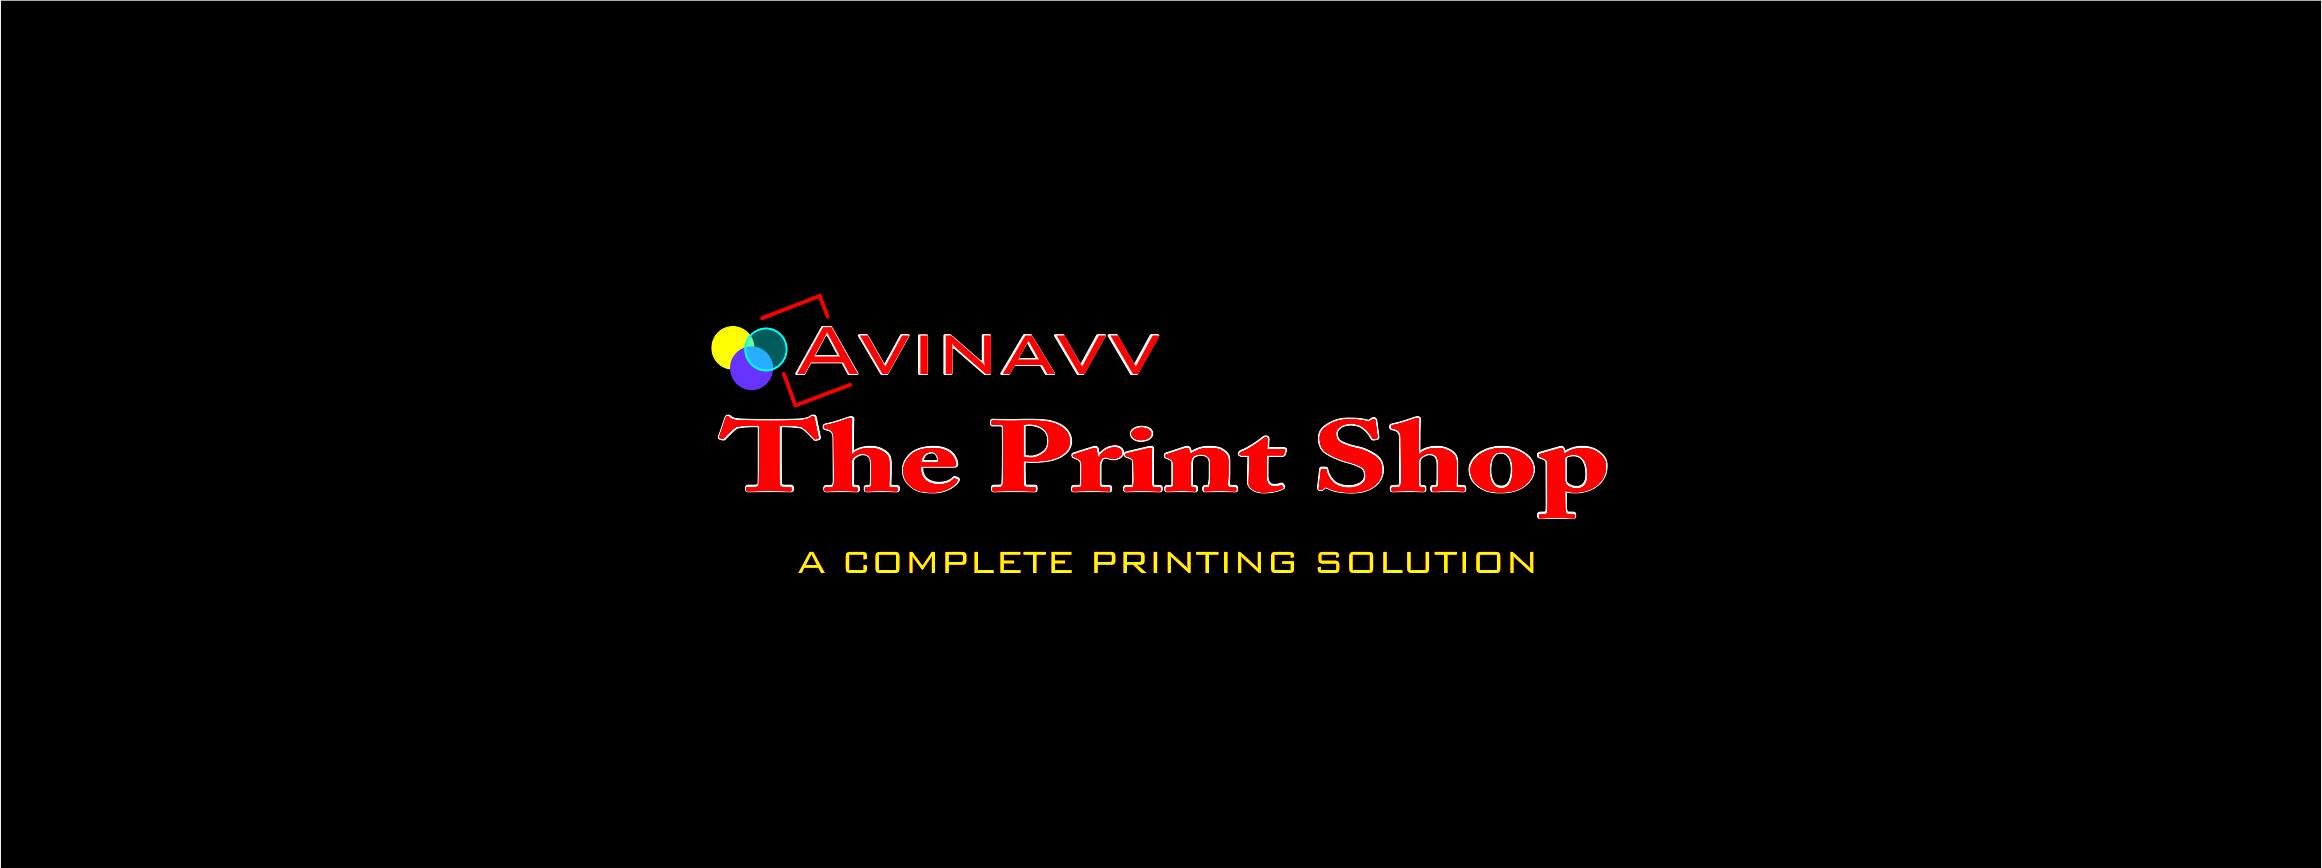 Avinavv The Print Shop